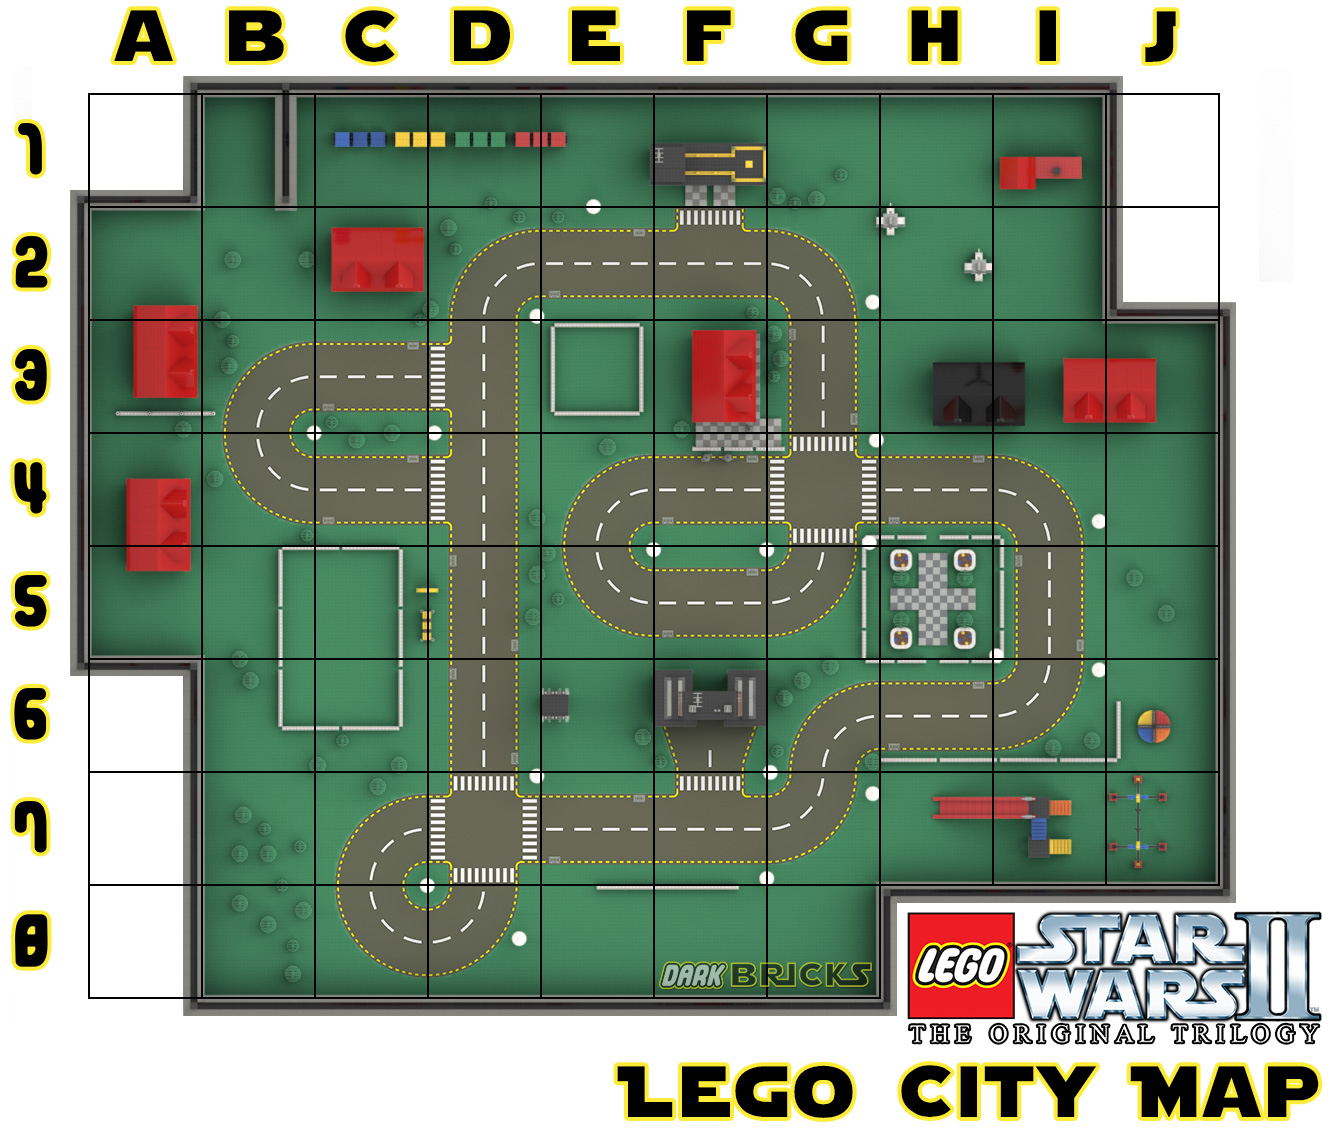 darkBricks - LEGO Star Wars - II - Original Trilogy - - City